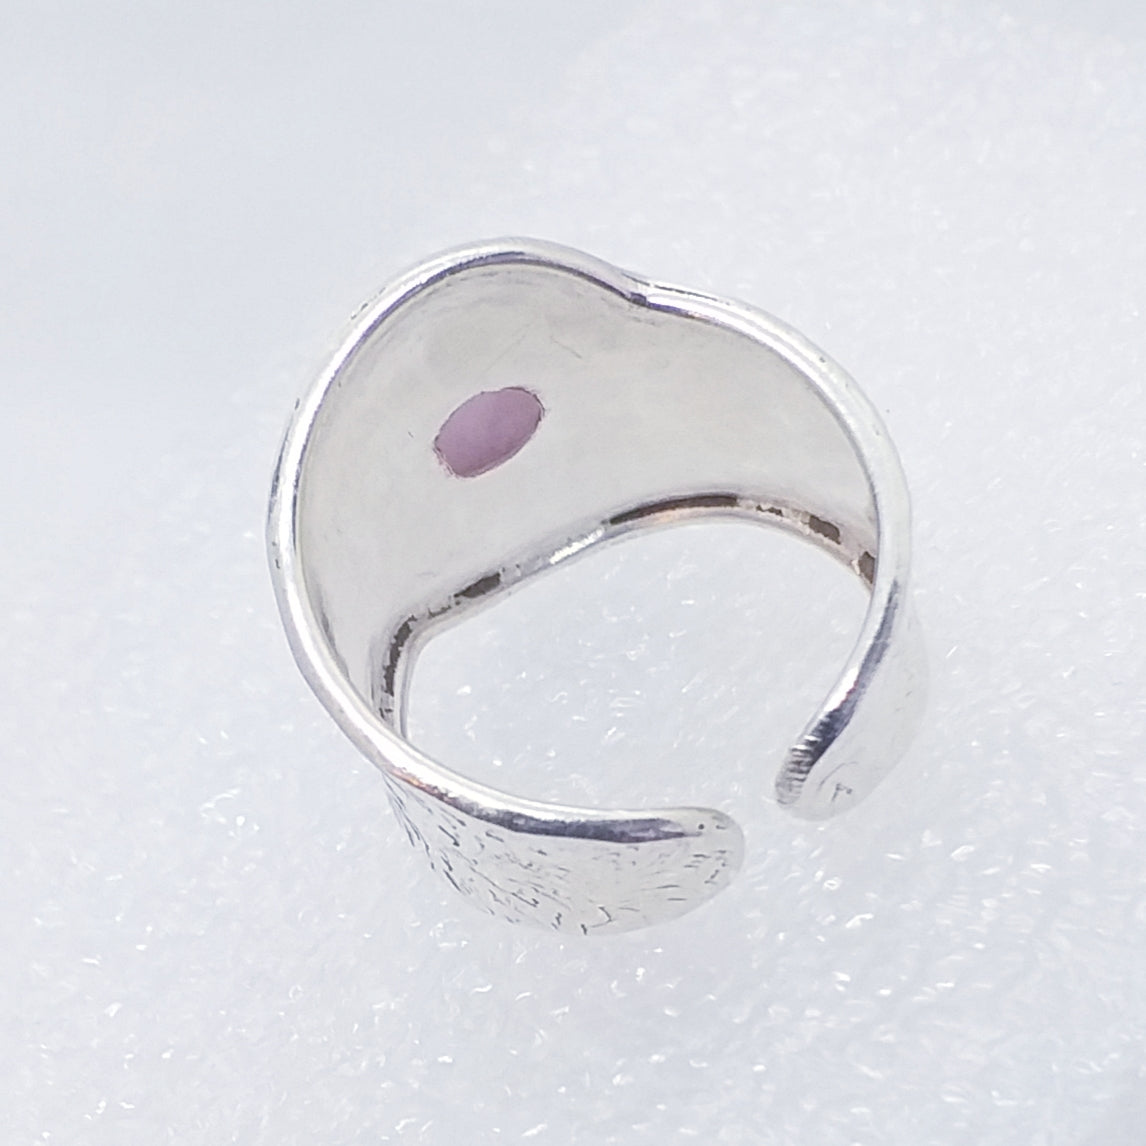 PINK OPAL ANDENOPAL Ring Gr. 18 - 19 925 Silber verstellbar